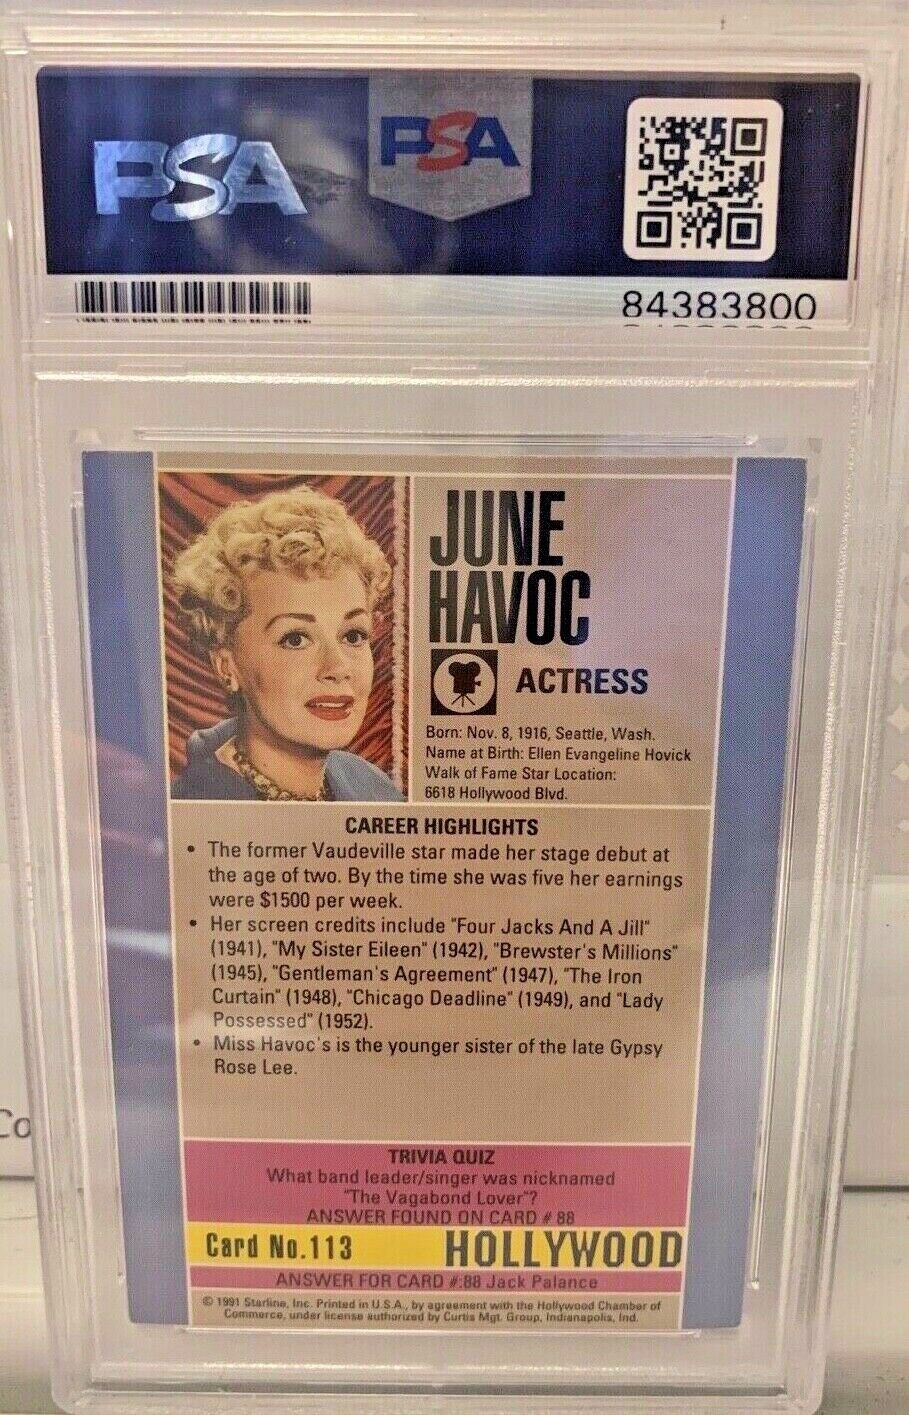 Autographed June Havoc Hollywood 1991 Trading Card 113 PSA Slabbed Certified